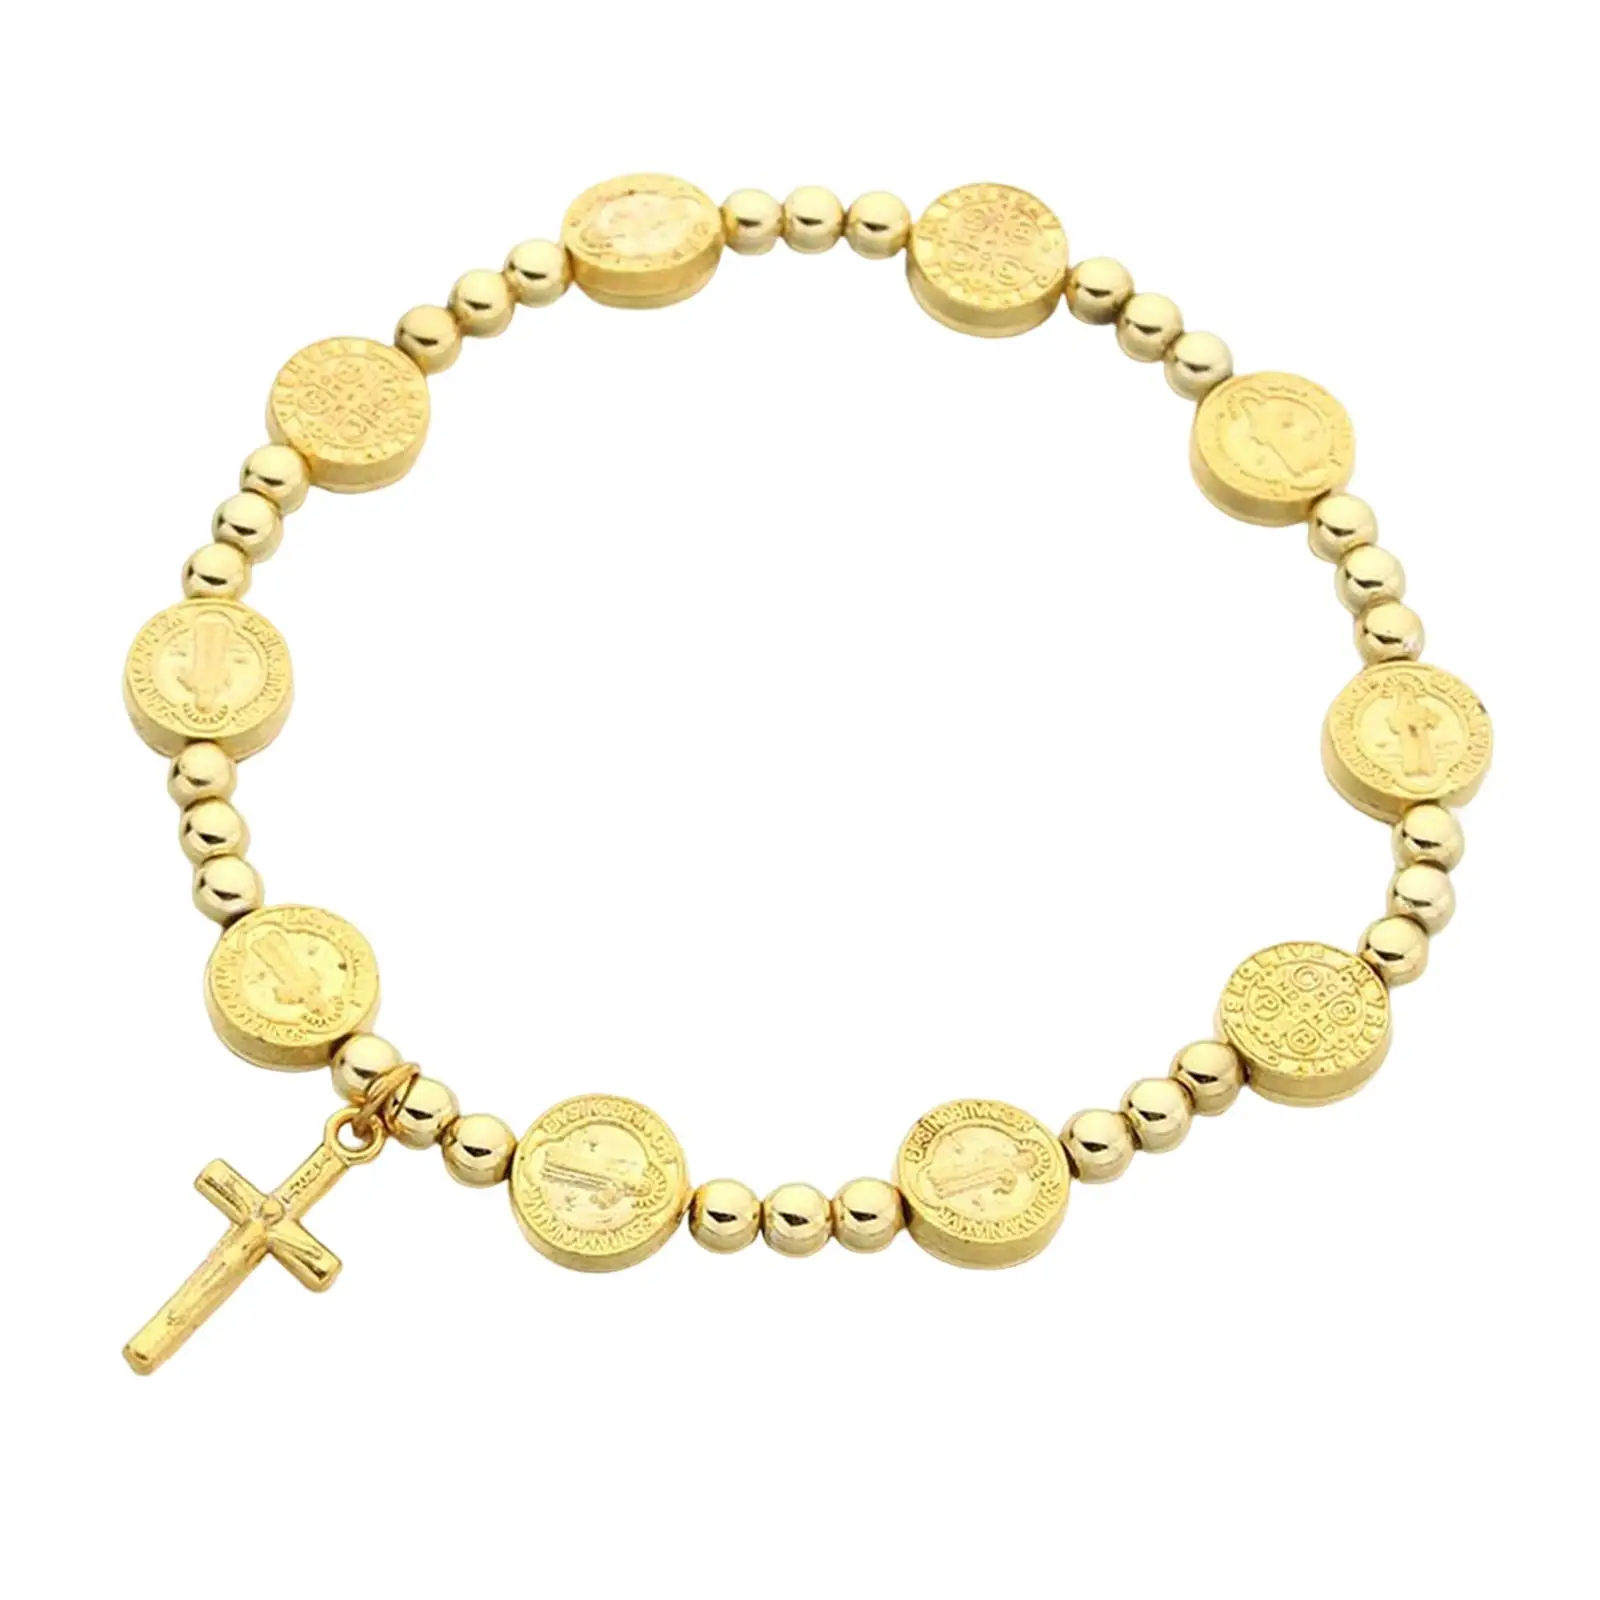 Aureate Cross Bracelet Cross Pendants for Wedding Confirmation Church Event Christening